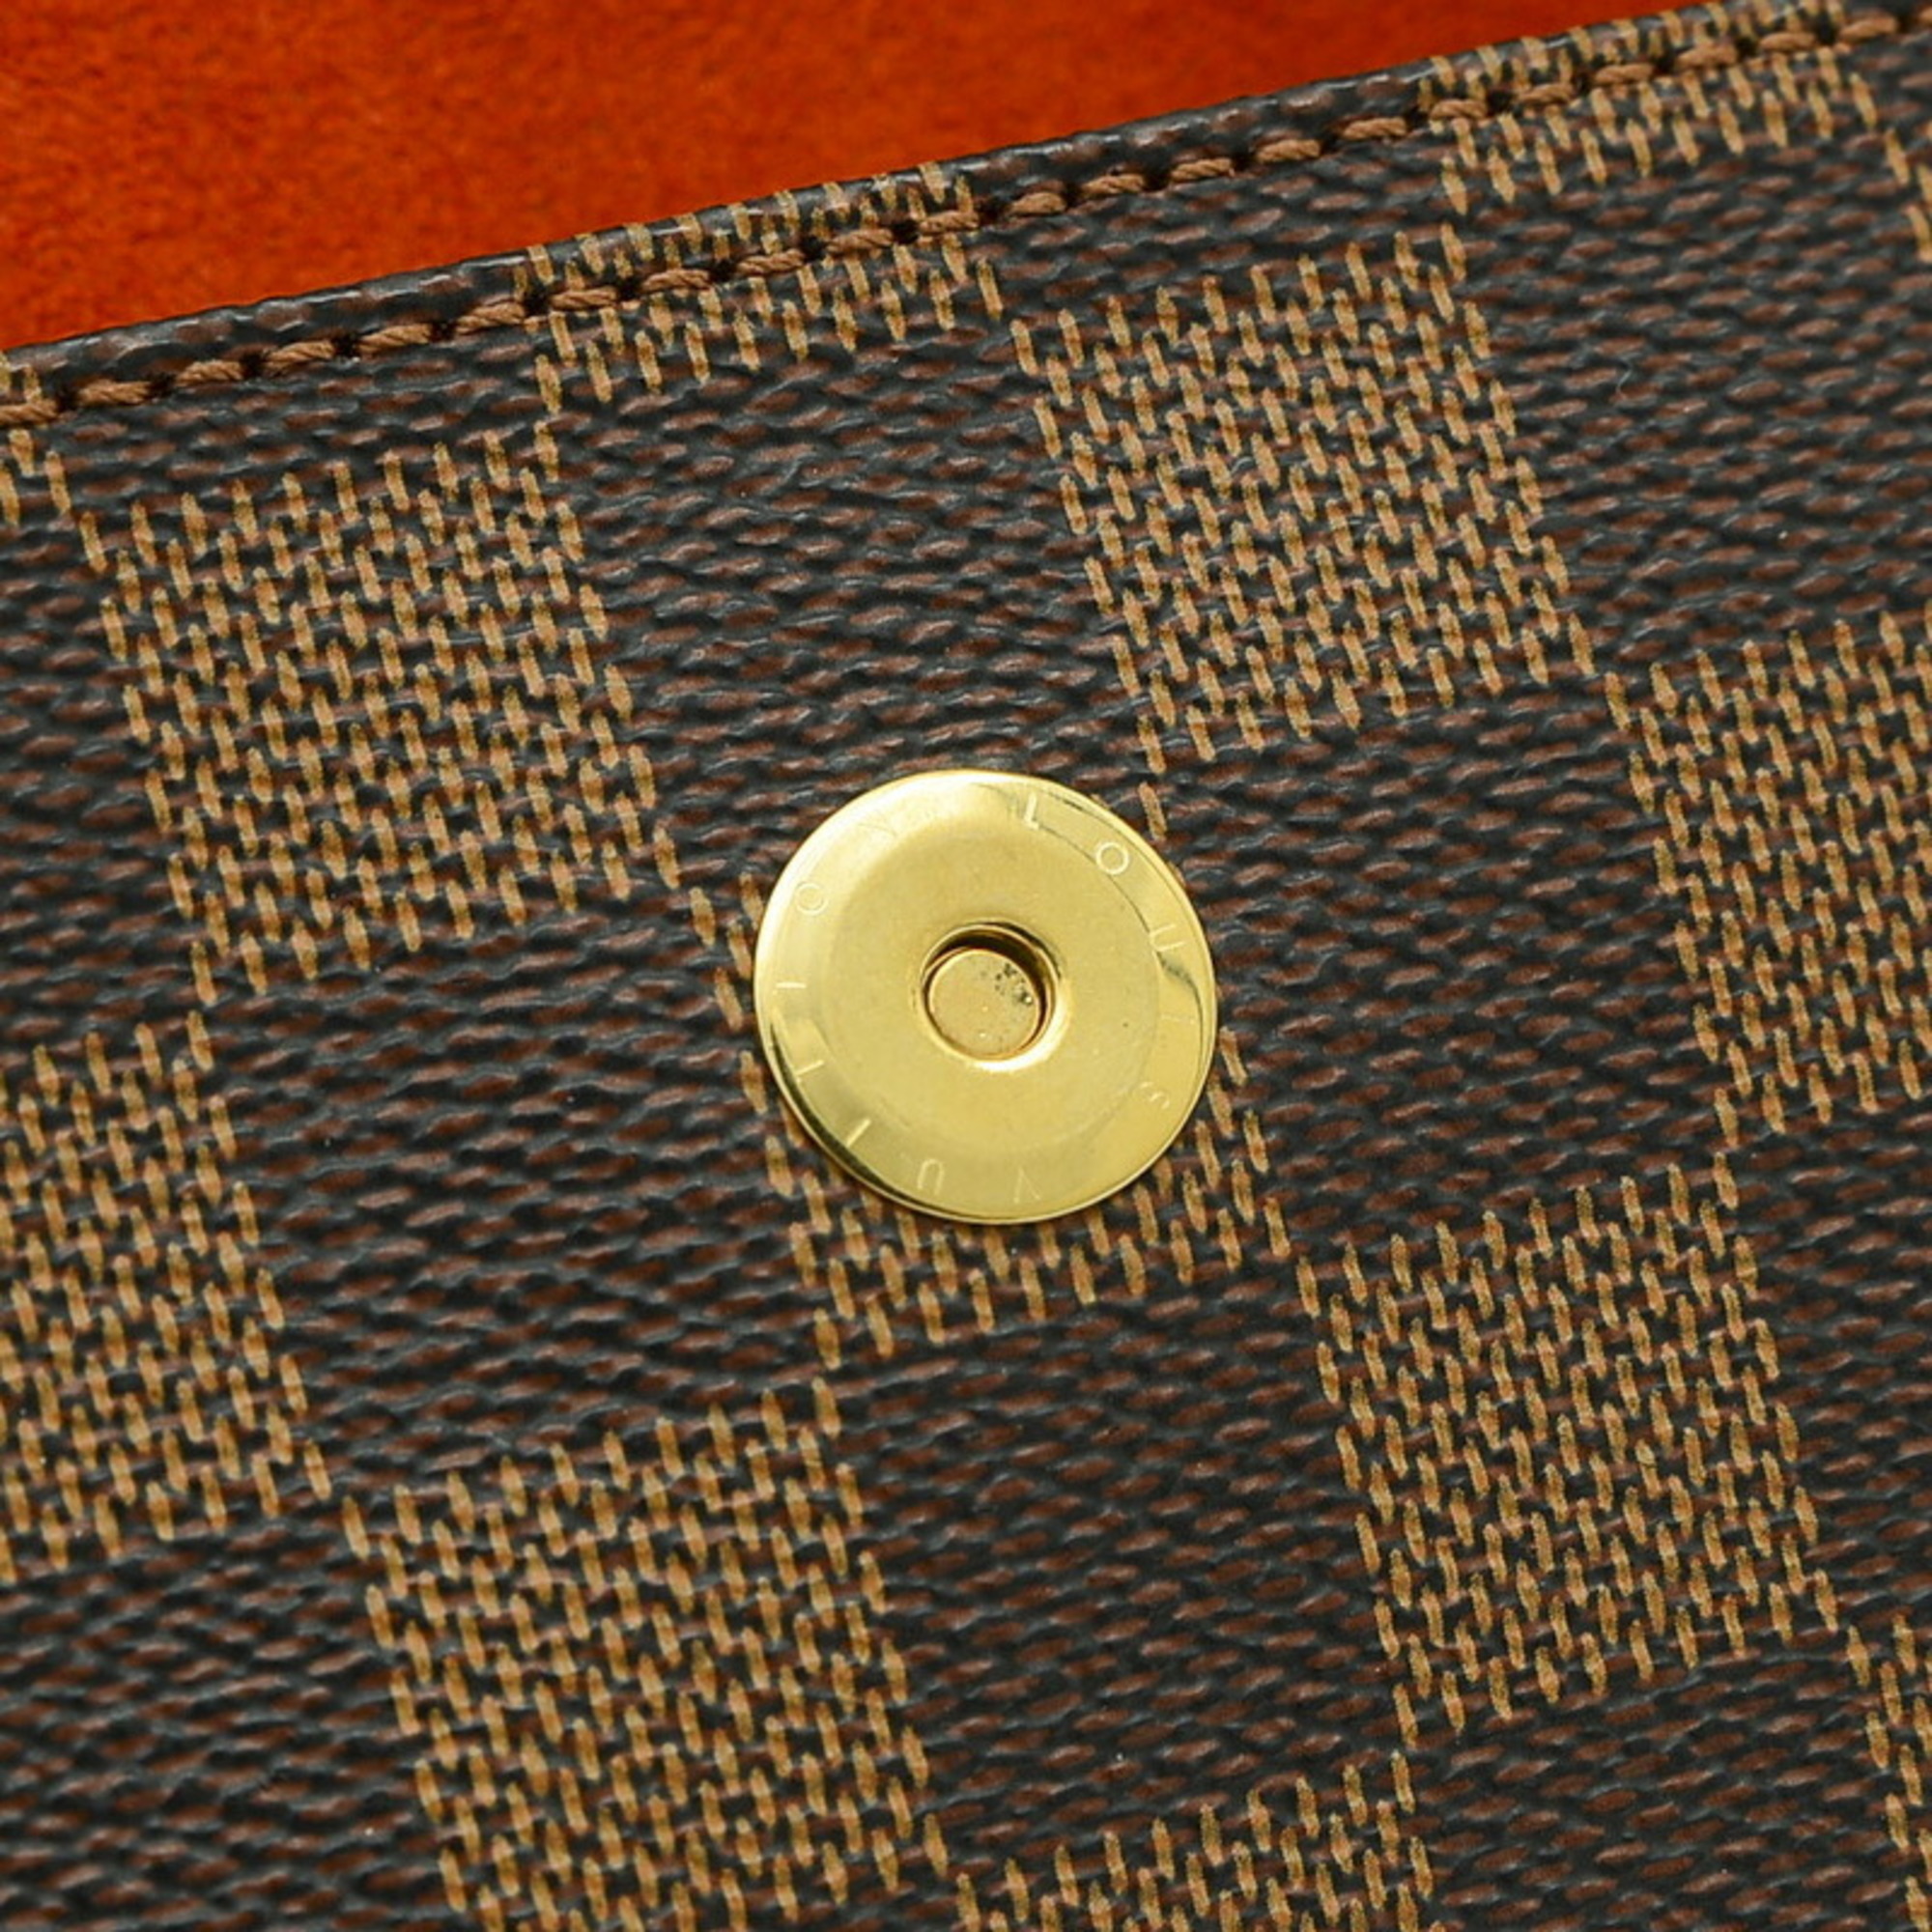 Louis Vuitton Damier Recoleta Shoulder Bag N51299